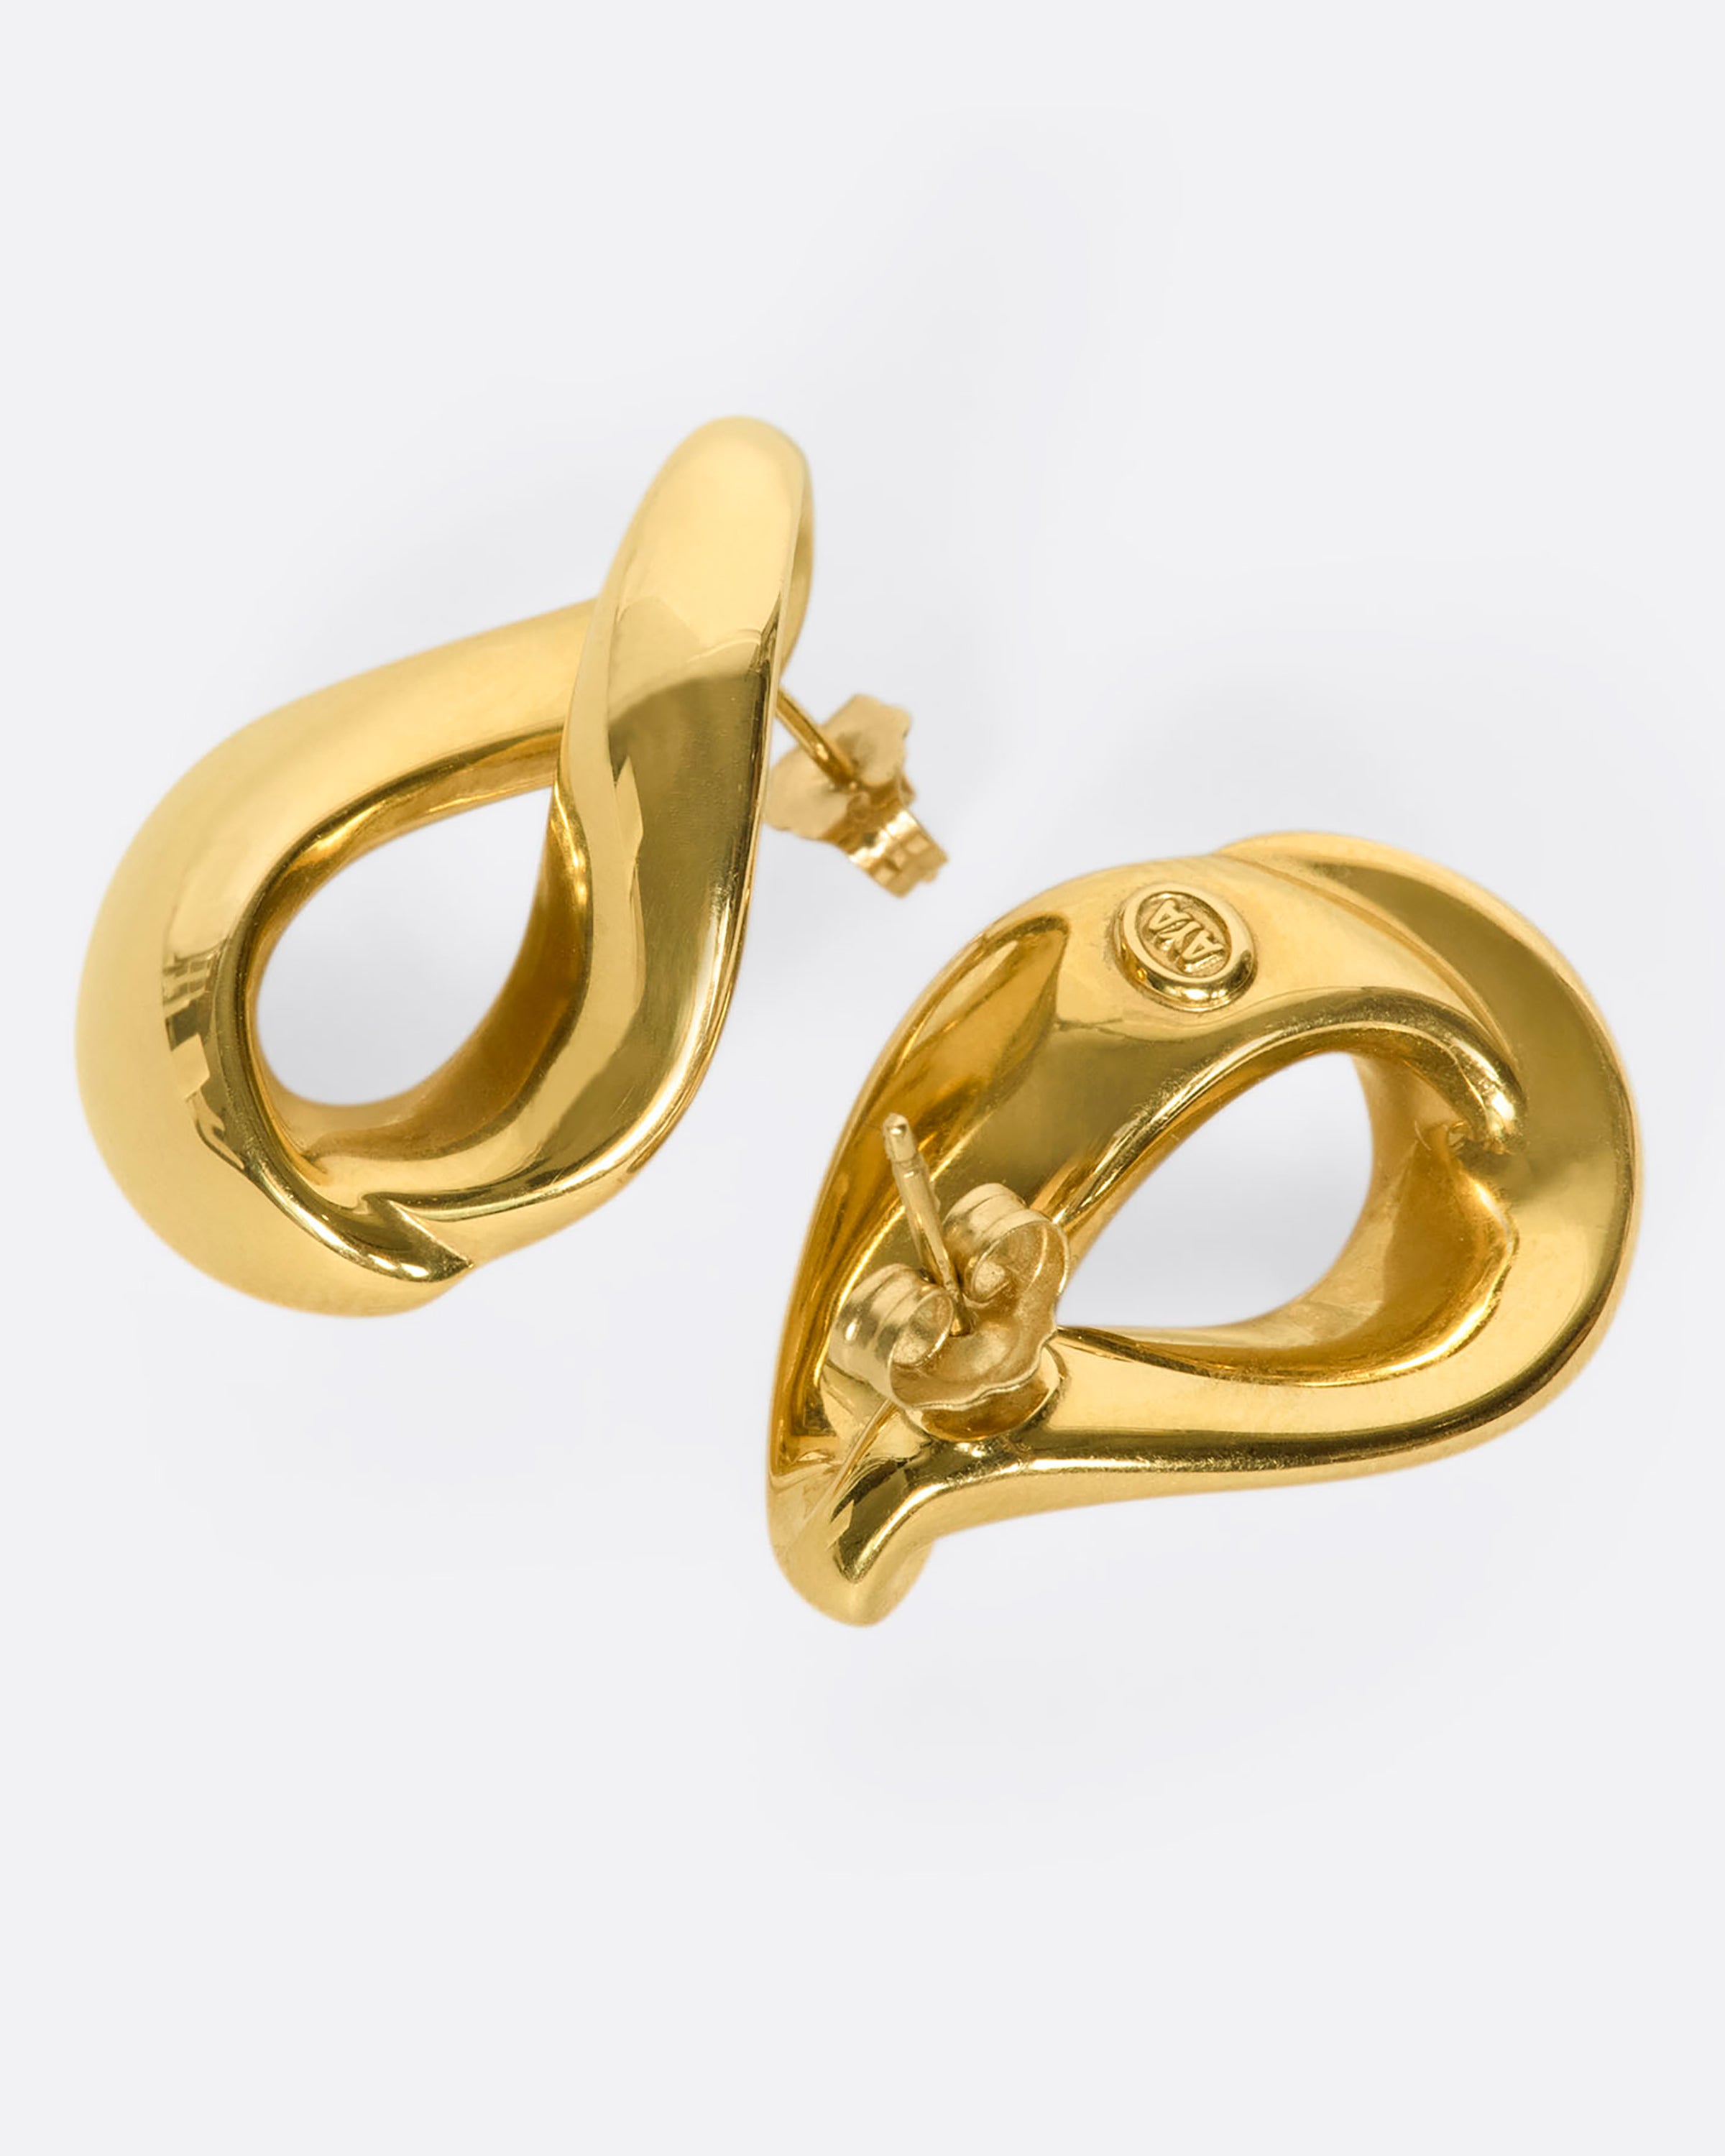 Beautiful light weight daily wear gold earrings designs - Simple Craft Idea